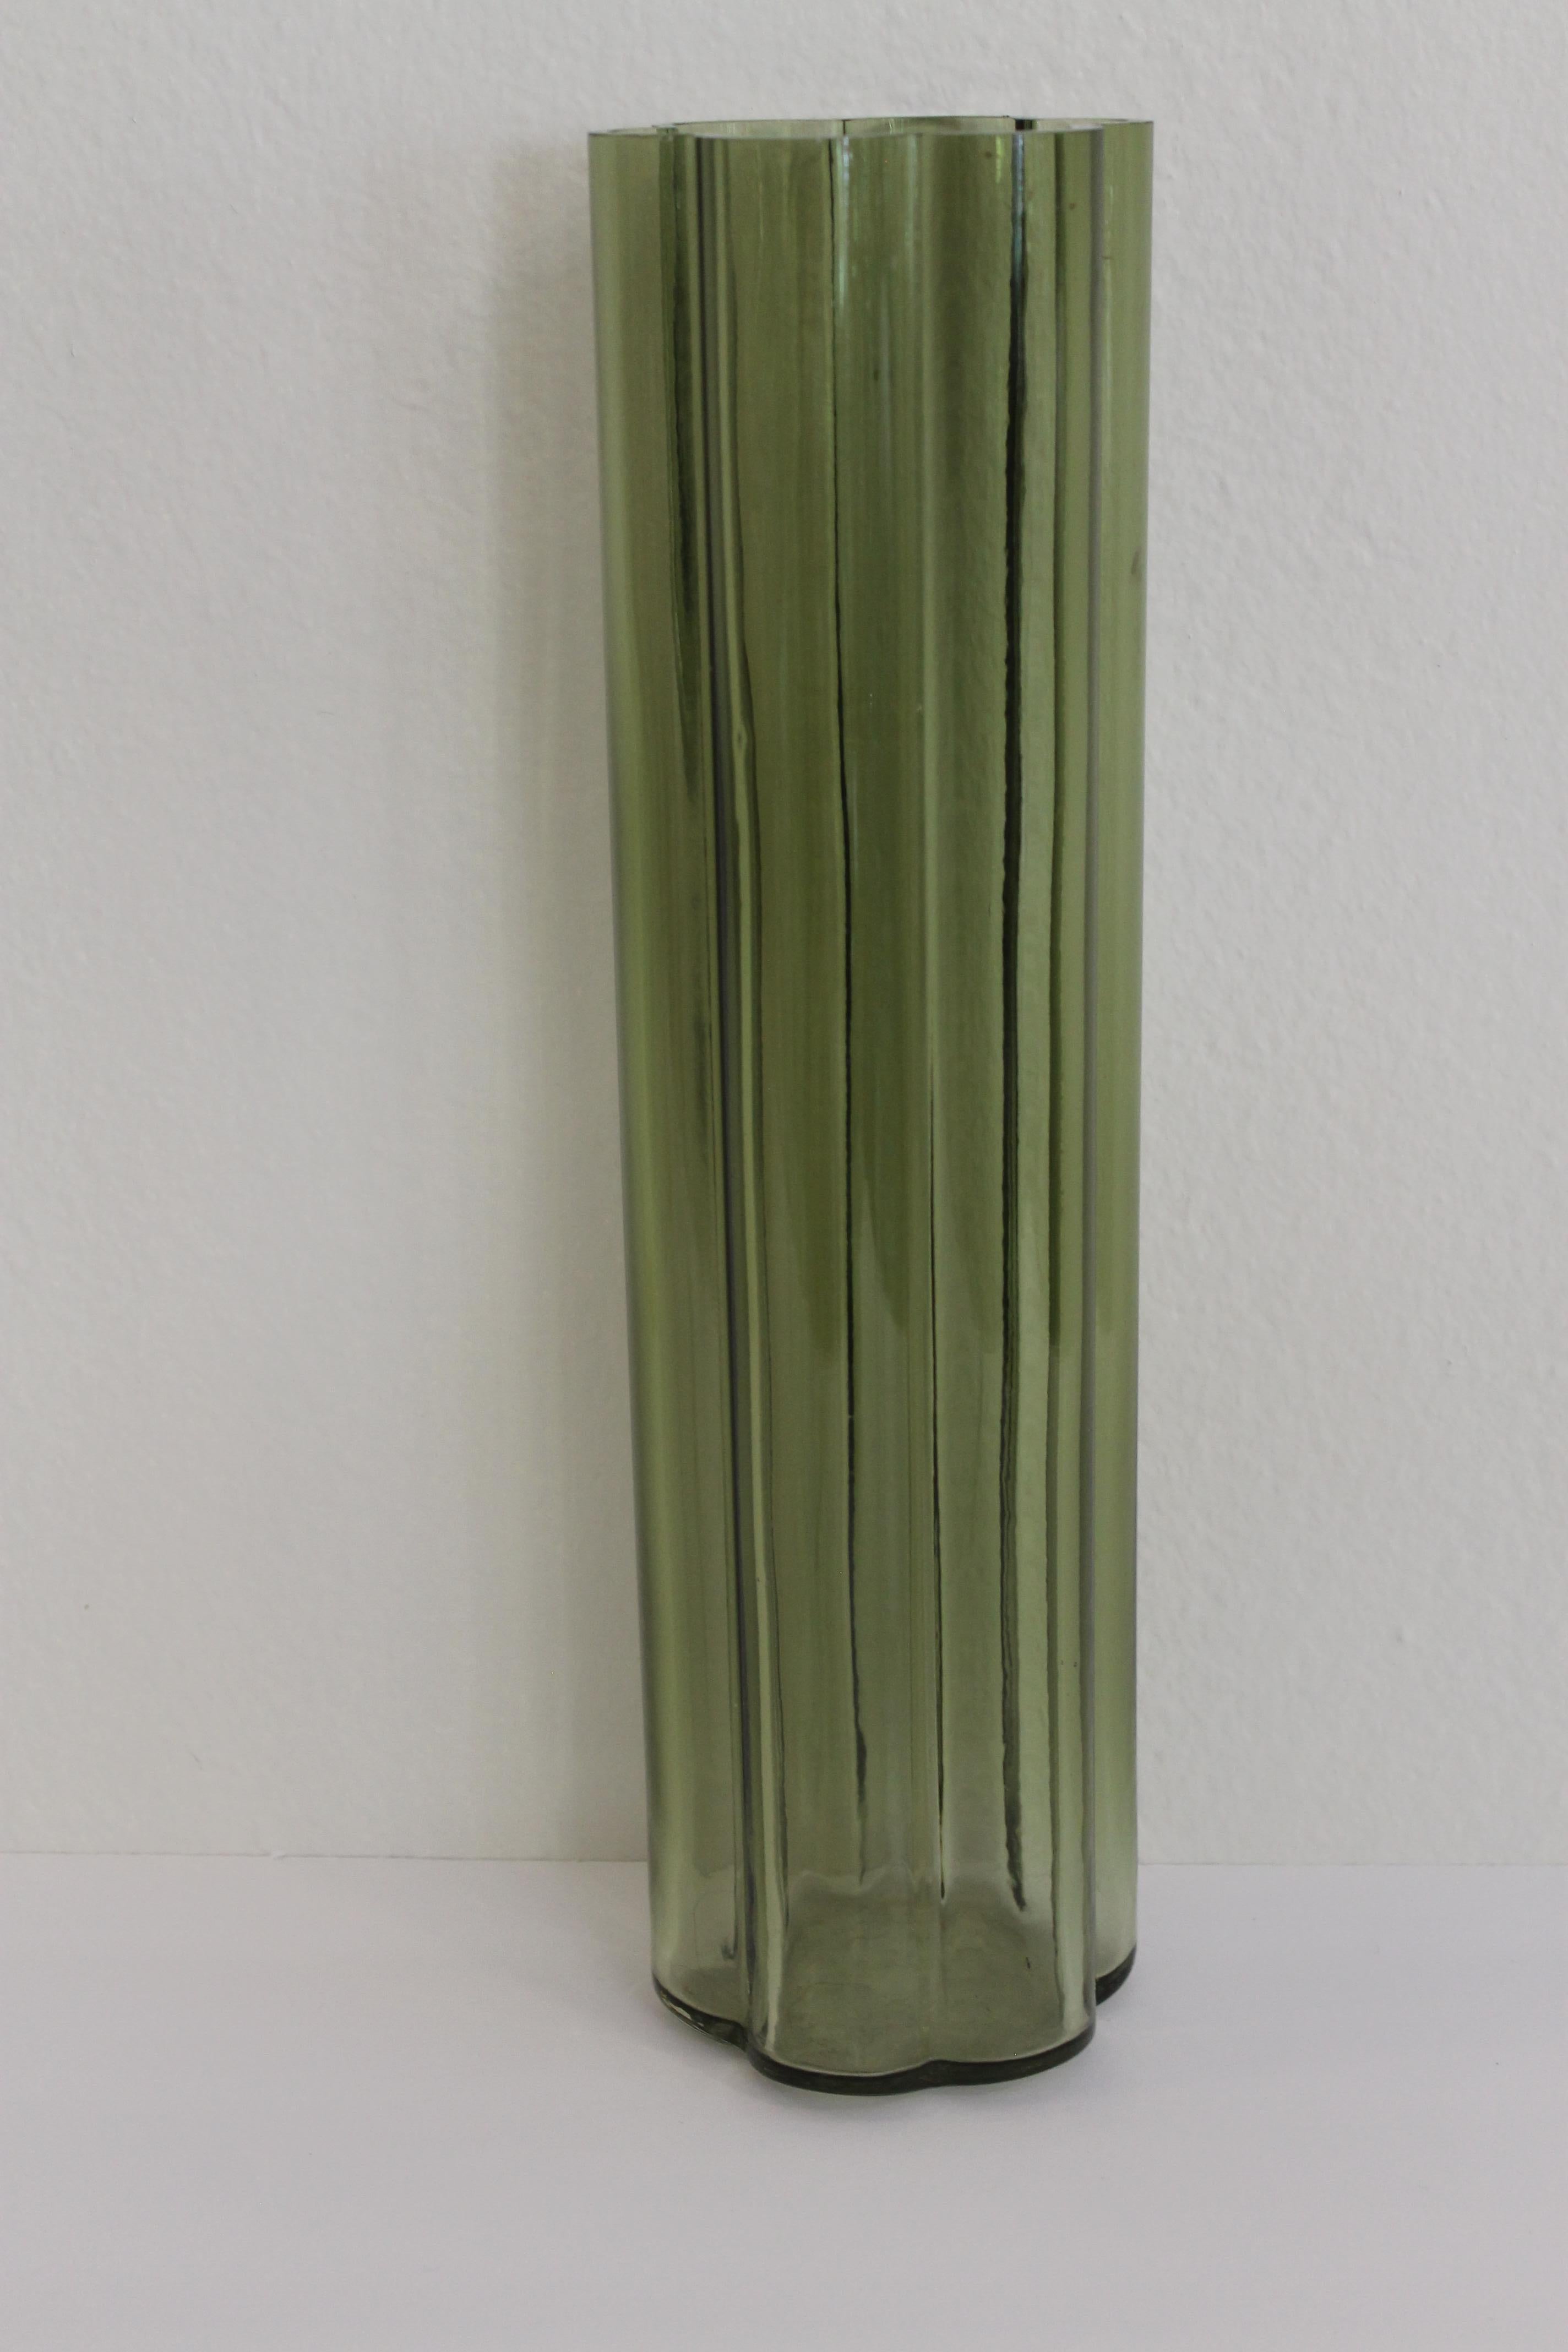 Mid-20th Century Twenty George Sakier Vases for Fostoria For Sale